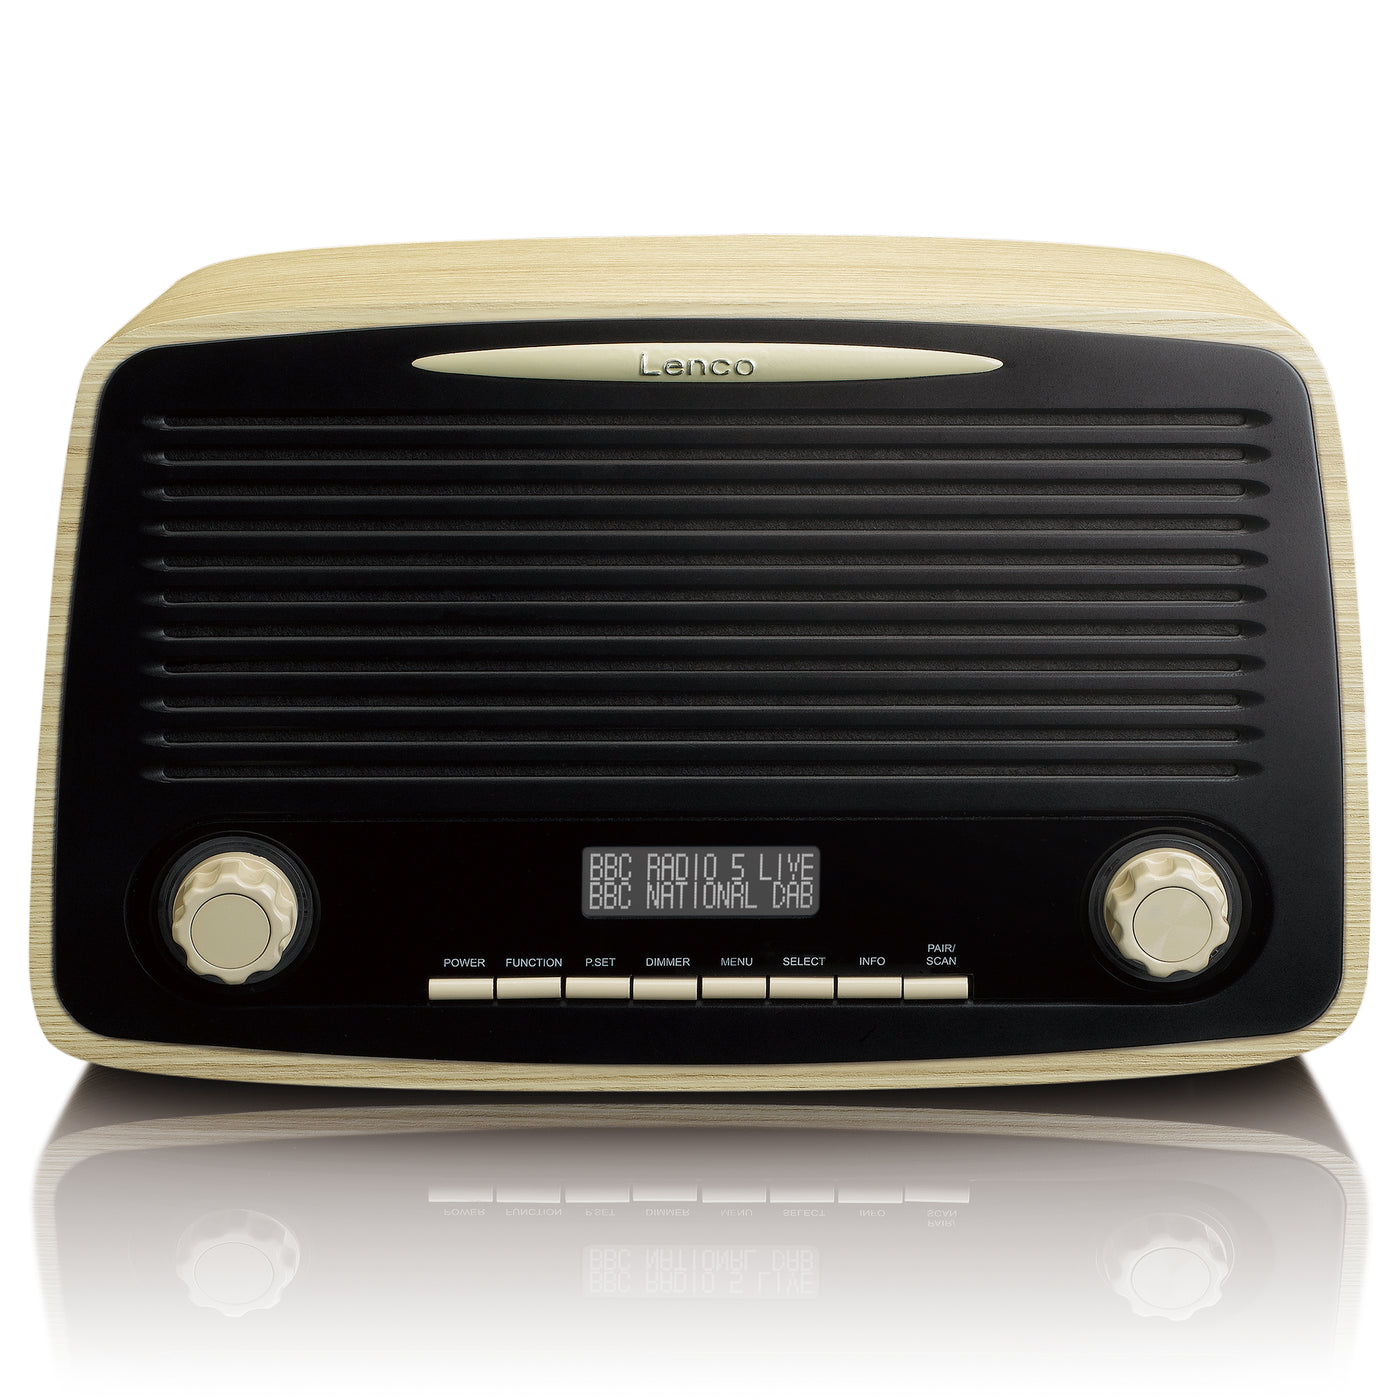 LENCO DAR-012WD - DAB+ FM Radio with Bluetooth®, AUX input and Alarm Function - Wood